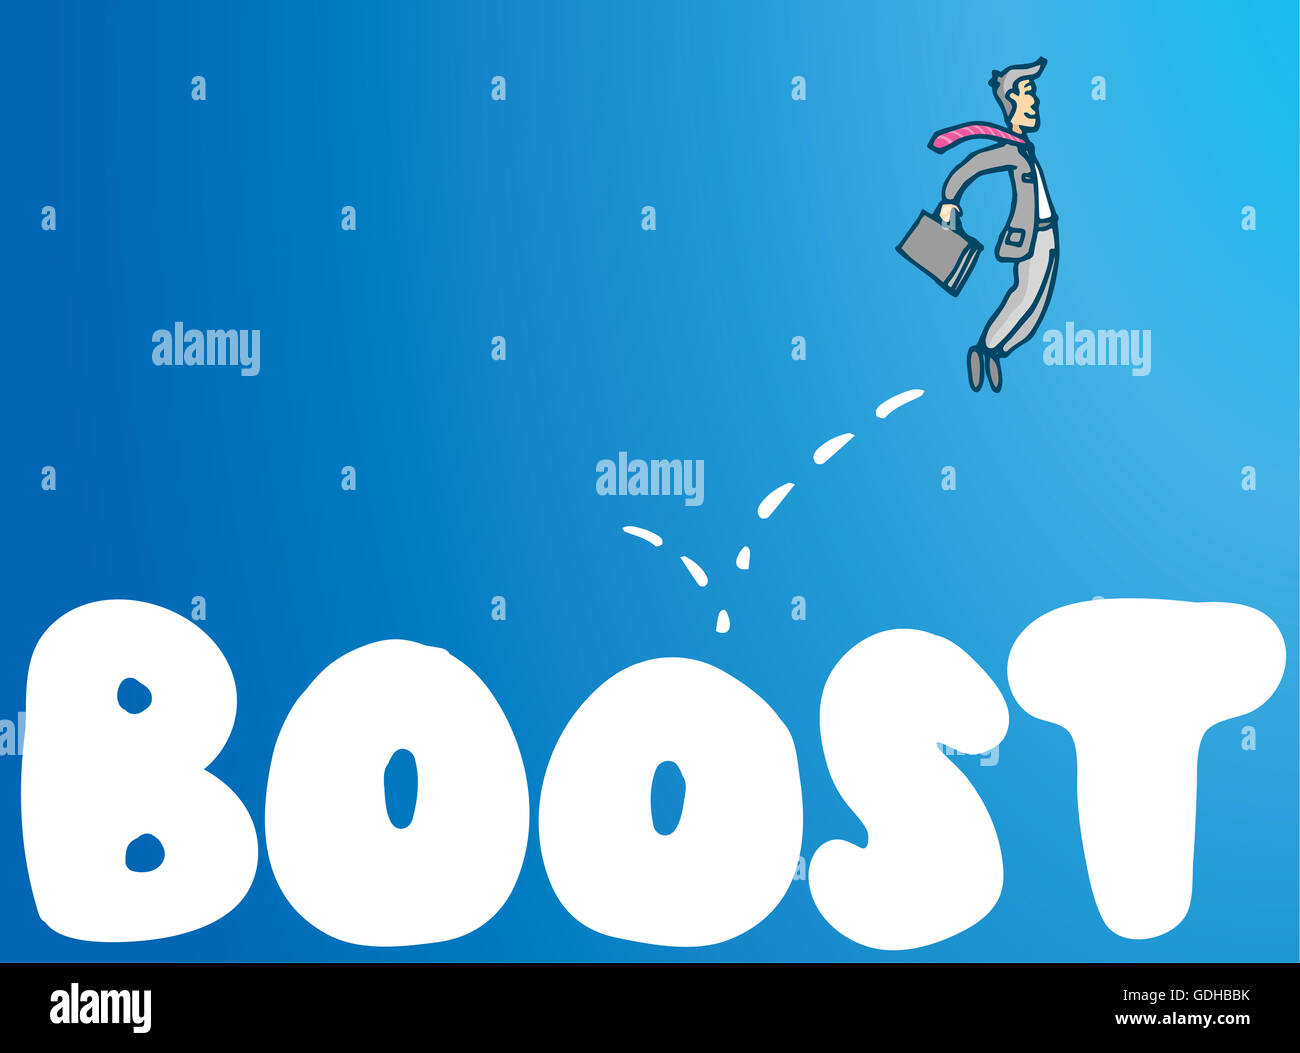 Cartoon illustration of businessman bouncing on boost word Stock Photo